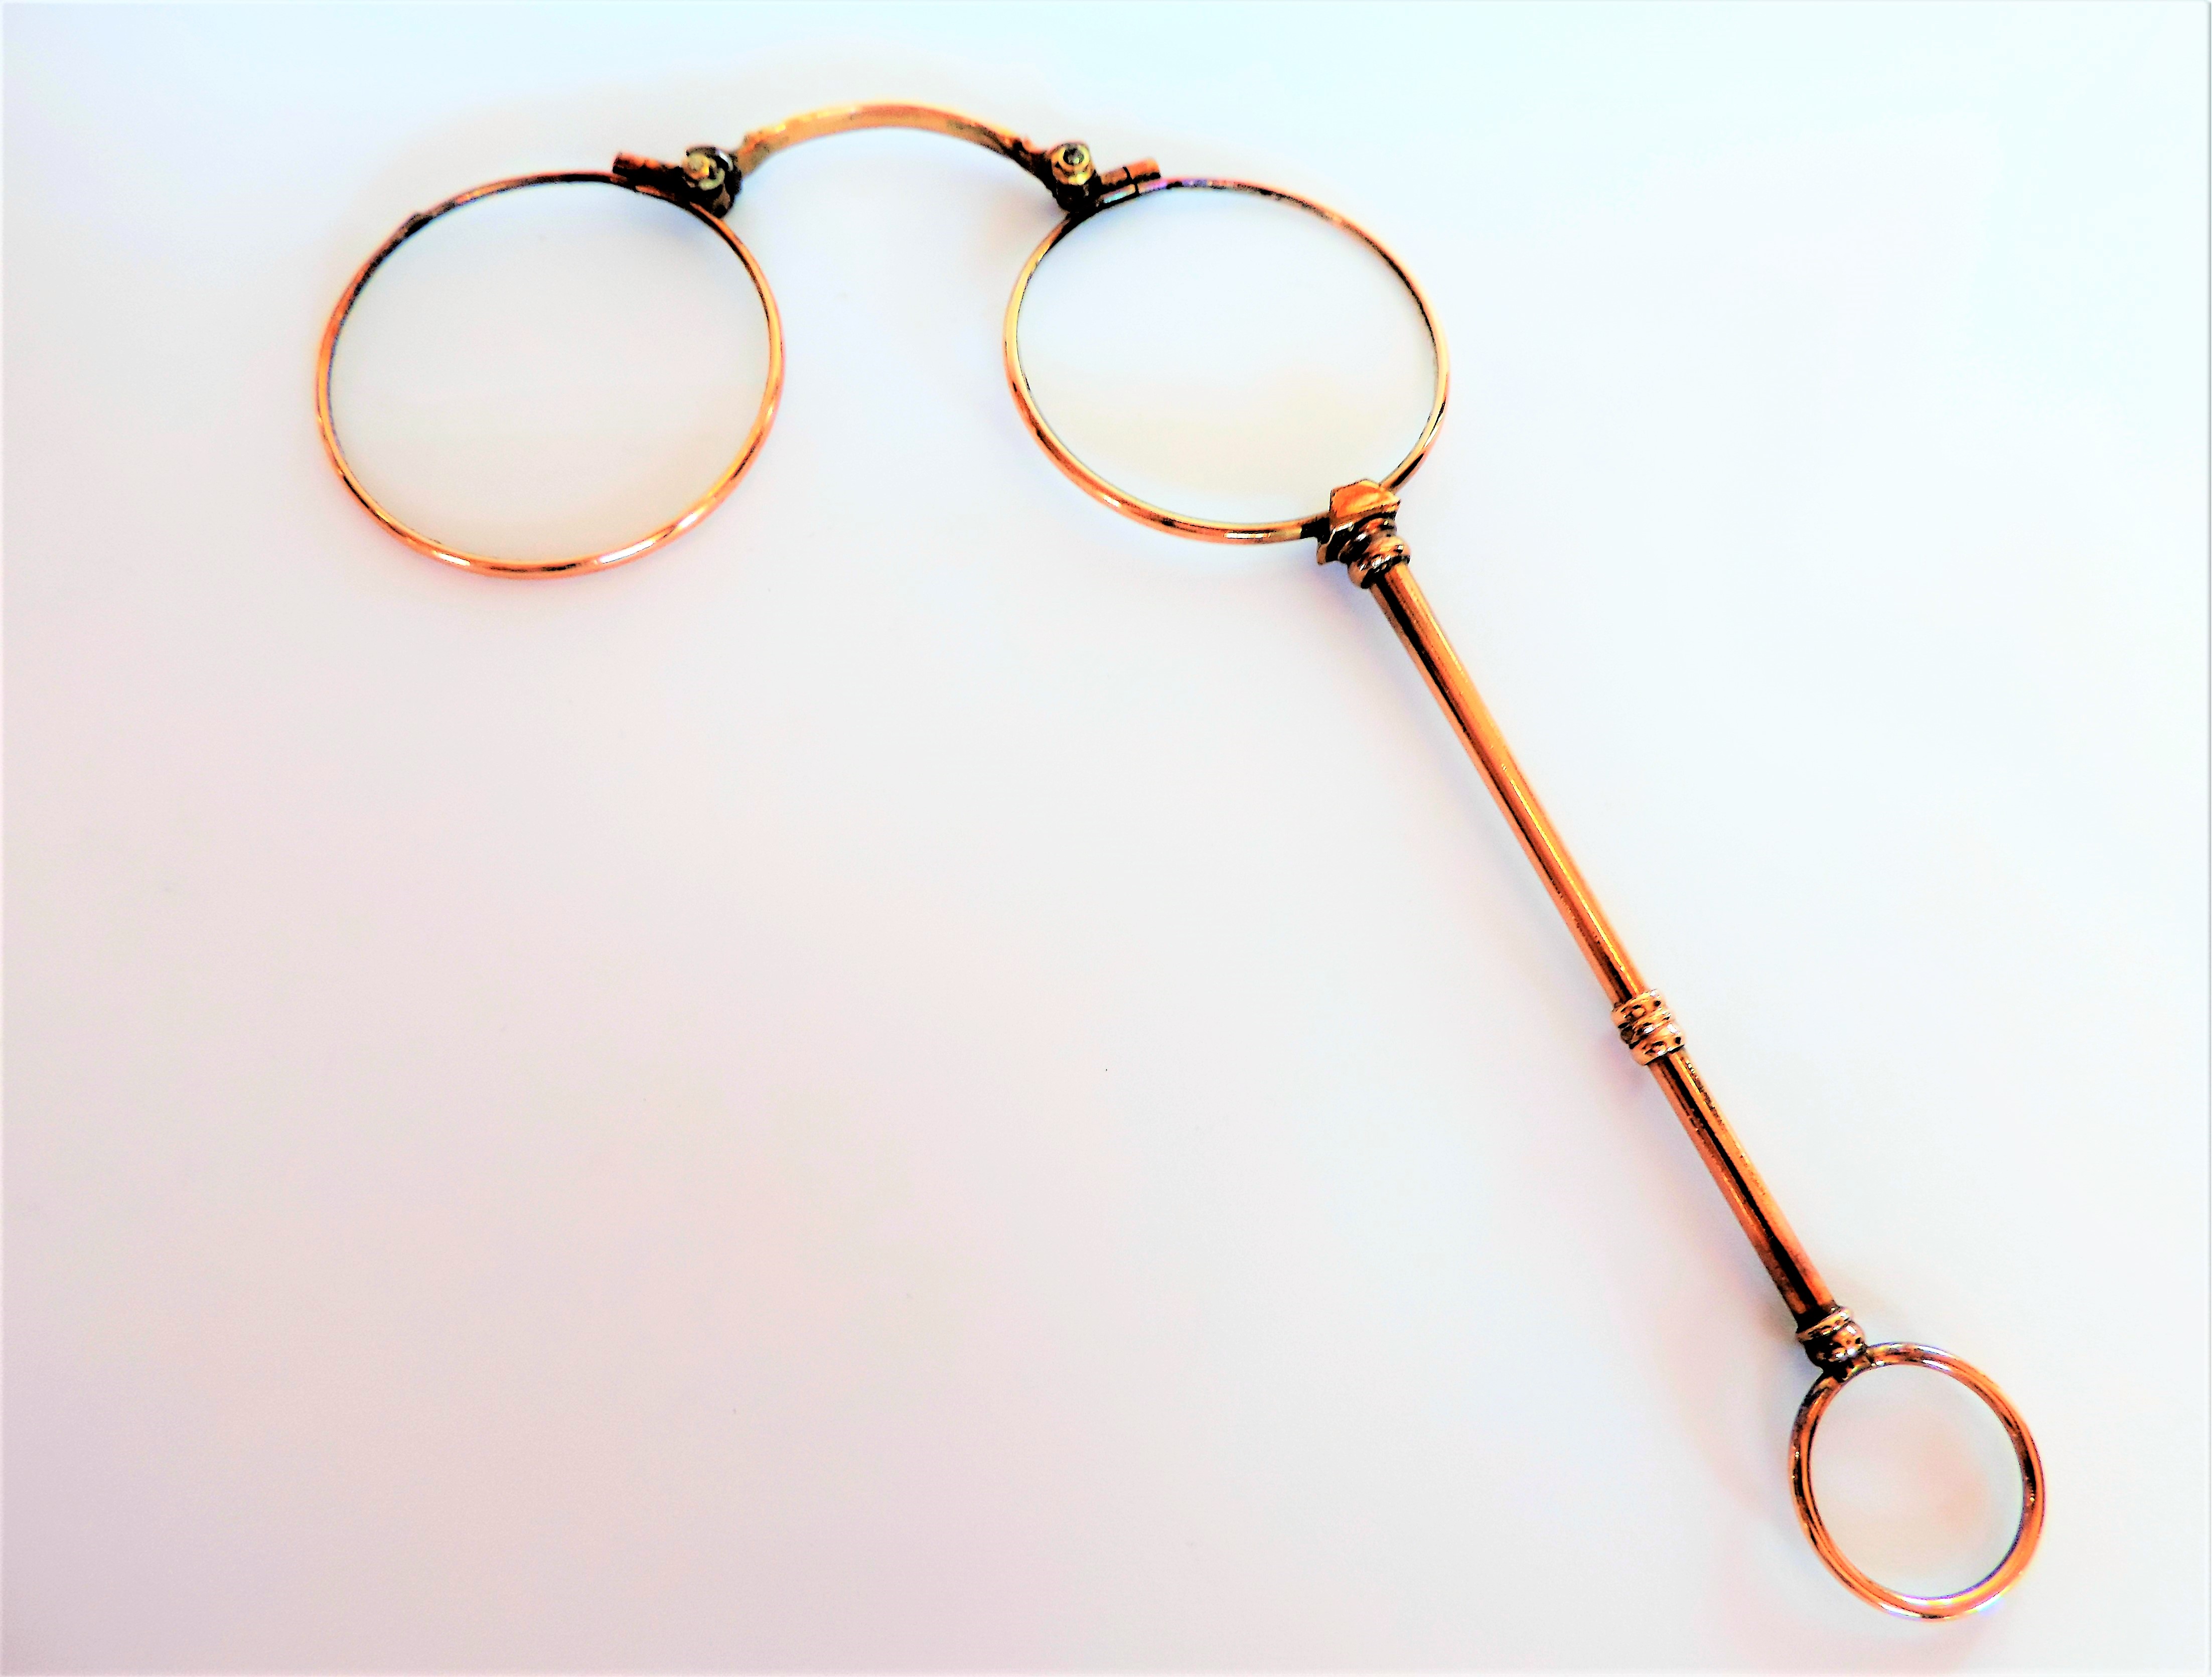 Antique Gold Plated Lorgnette Folding Glasses